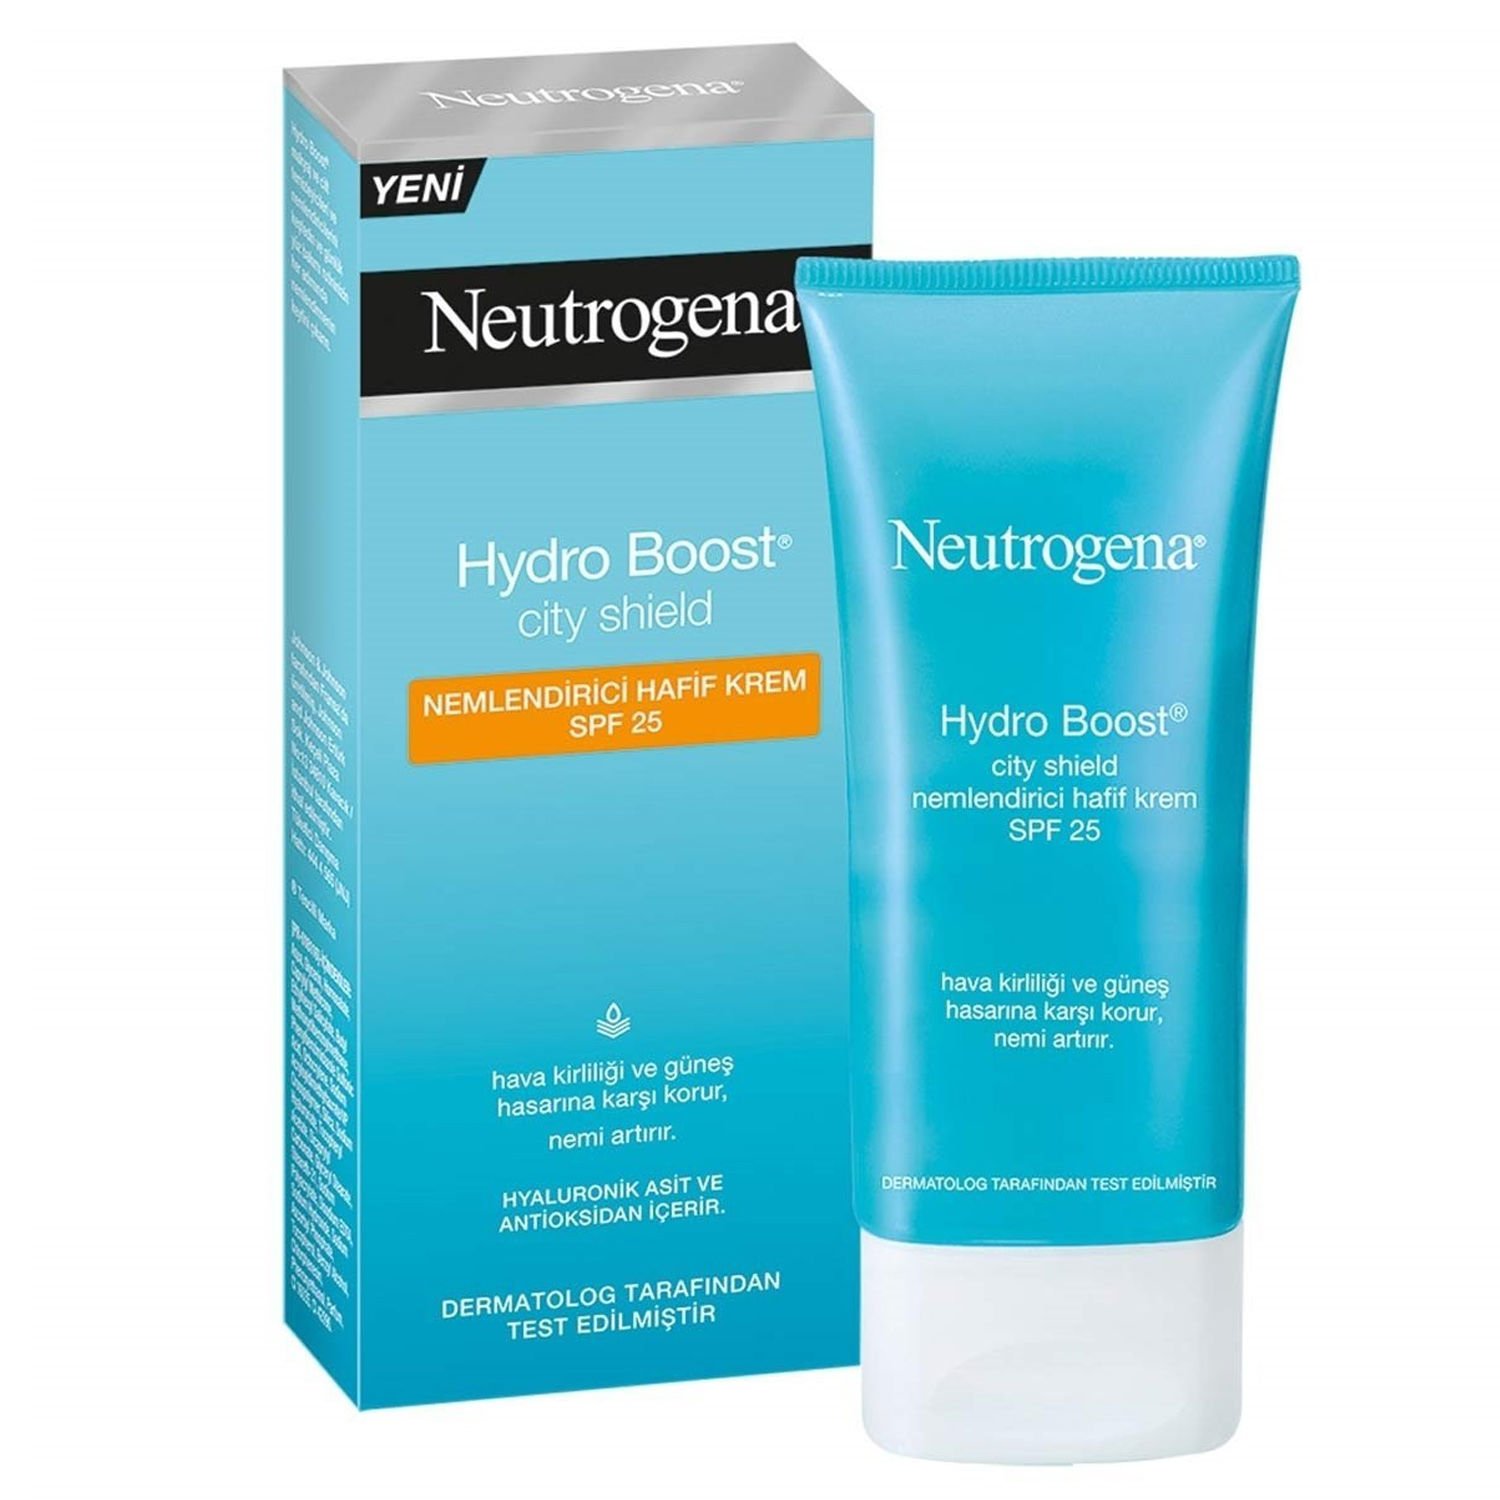 Neutrogena Hydro Boost Spf 25 Nemlendirici Hafif Krem 50 ml